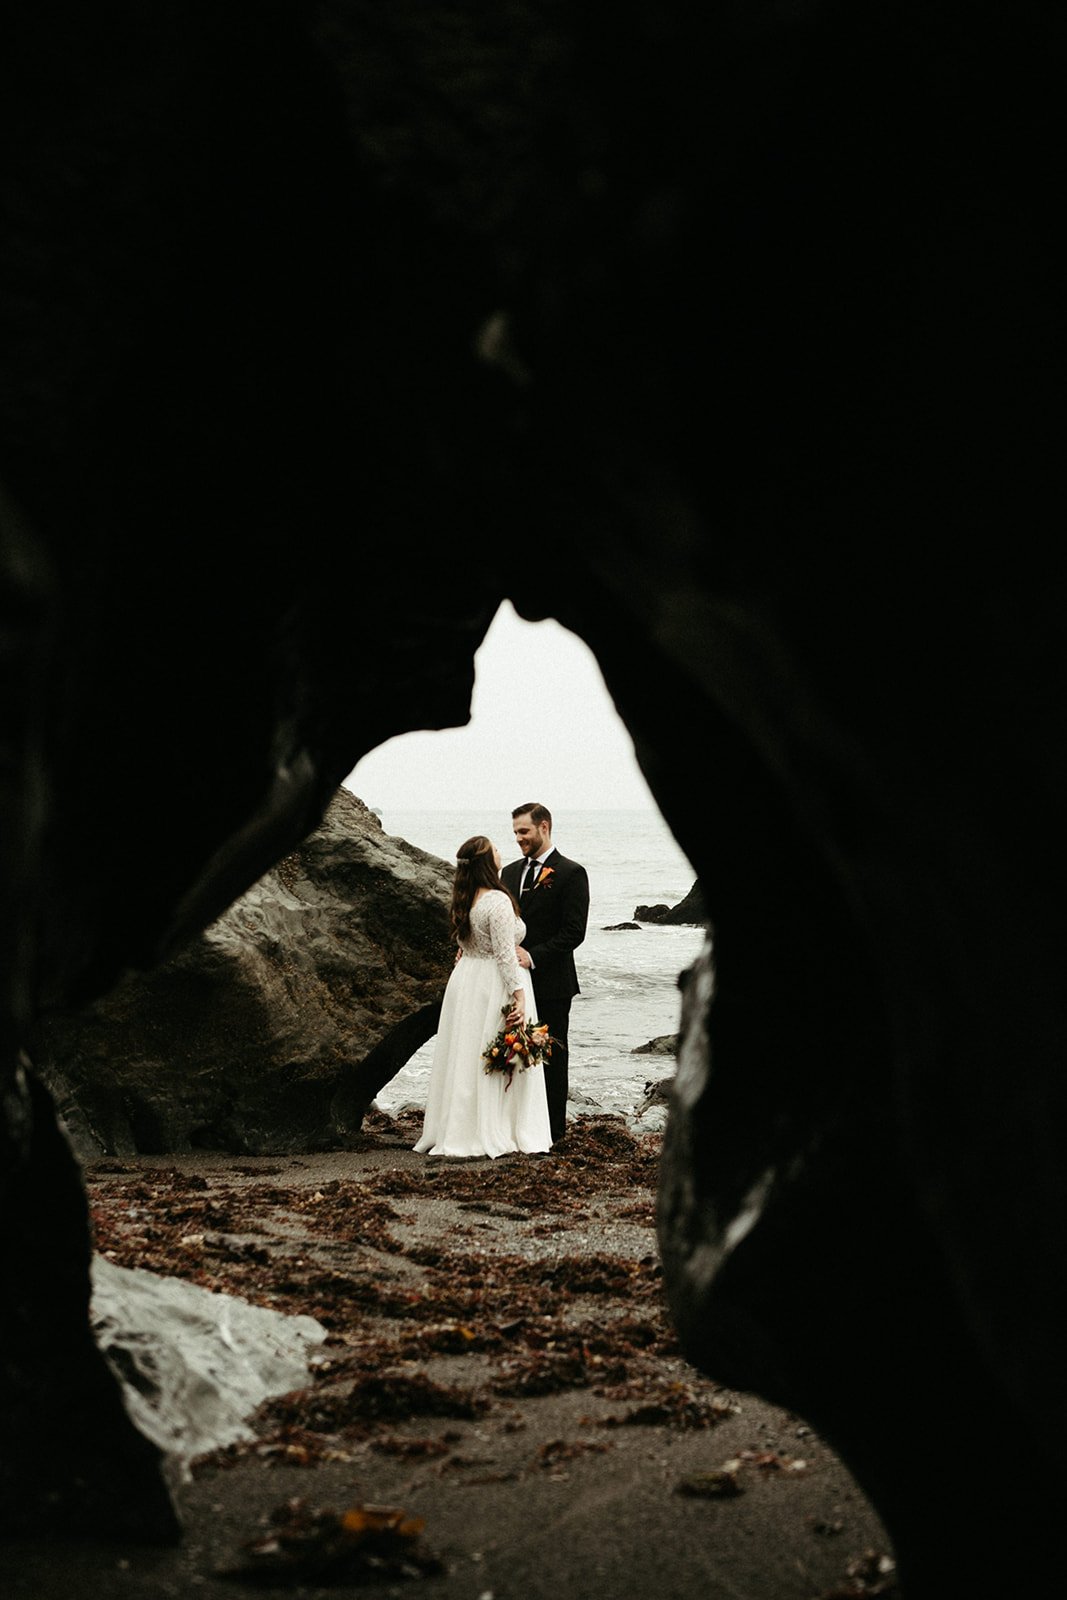 wedding-elopement-photos-han-kat-studio-pnw-portland-oregon-coast-59_websize.jpg